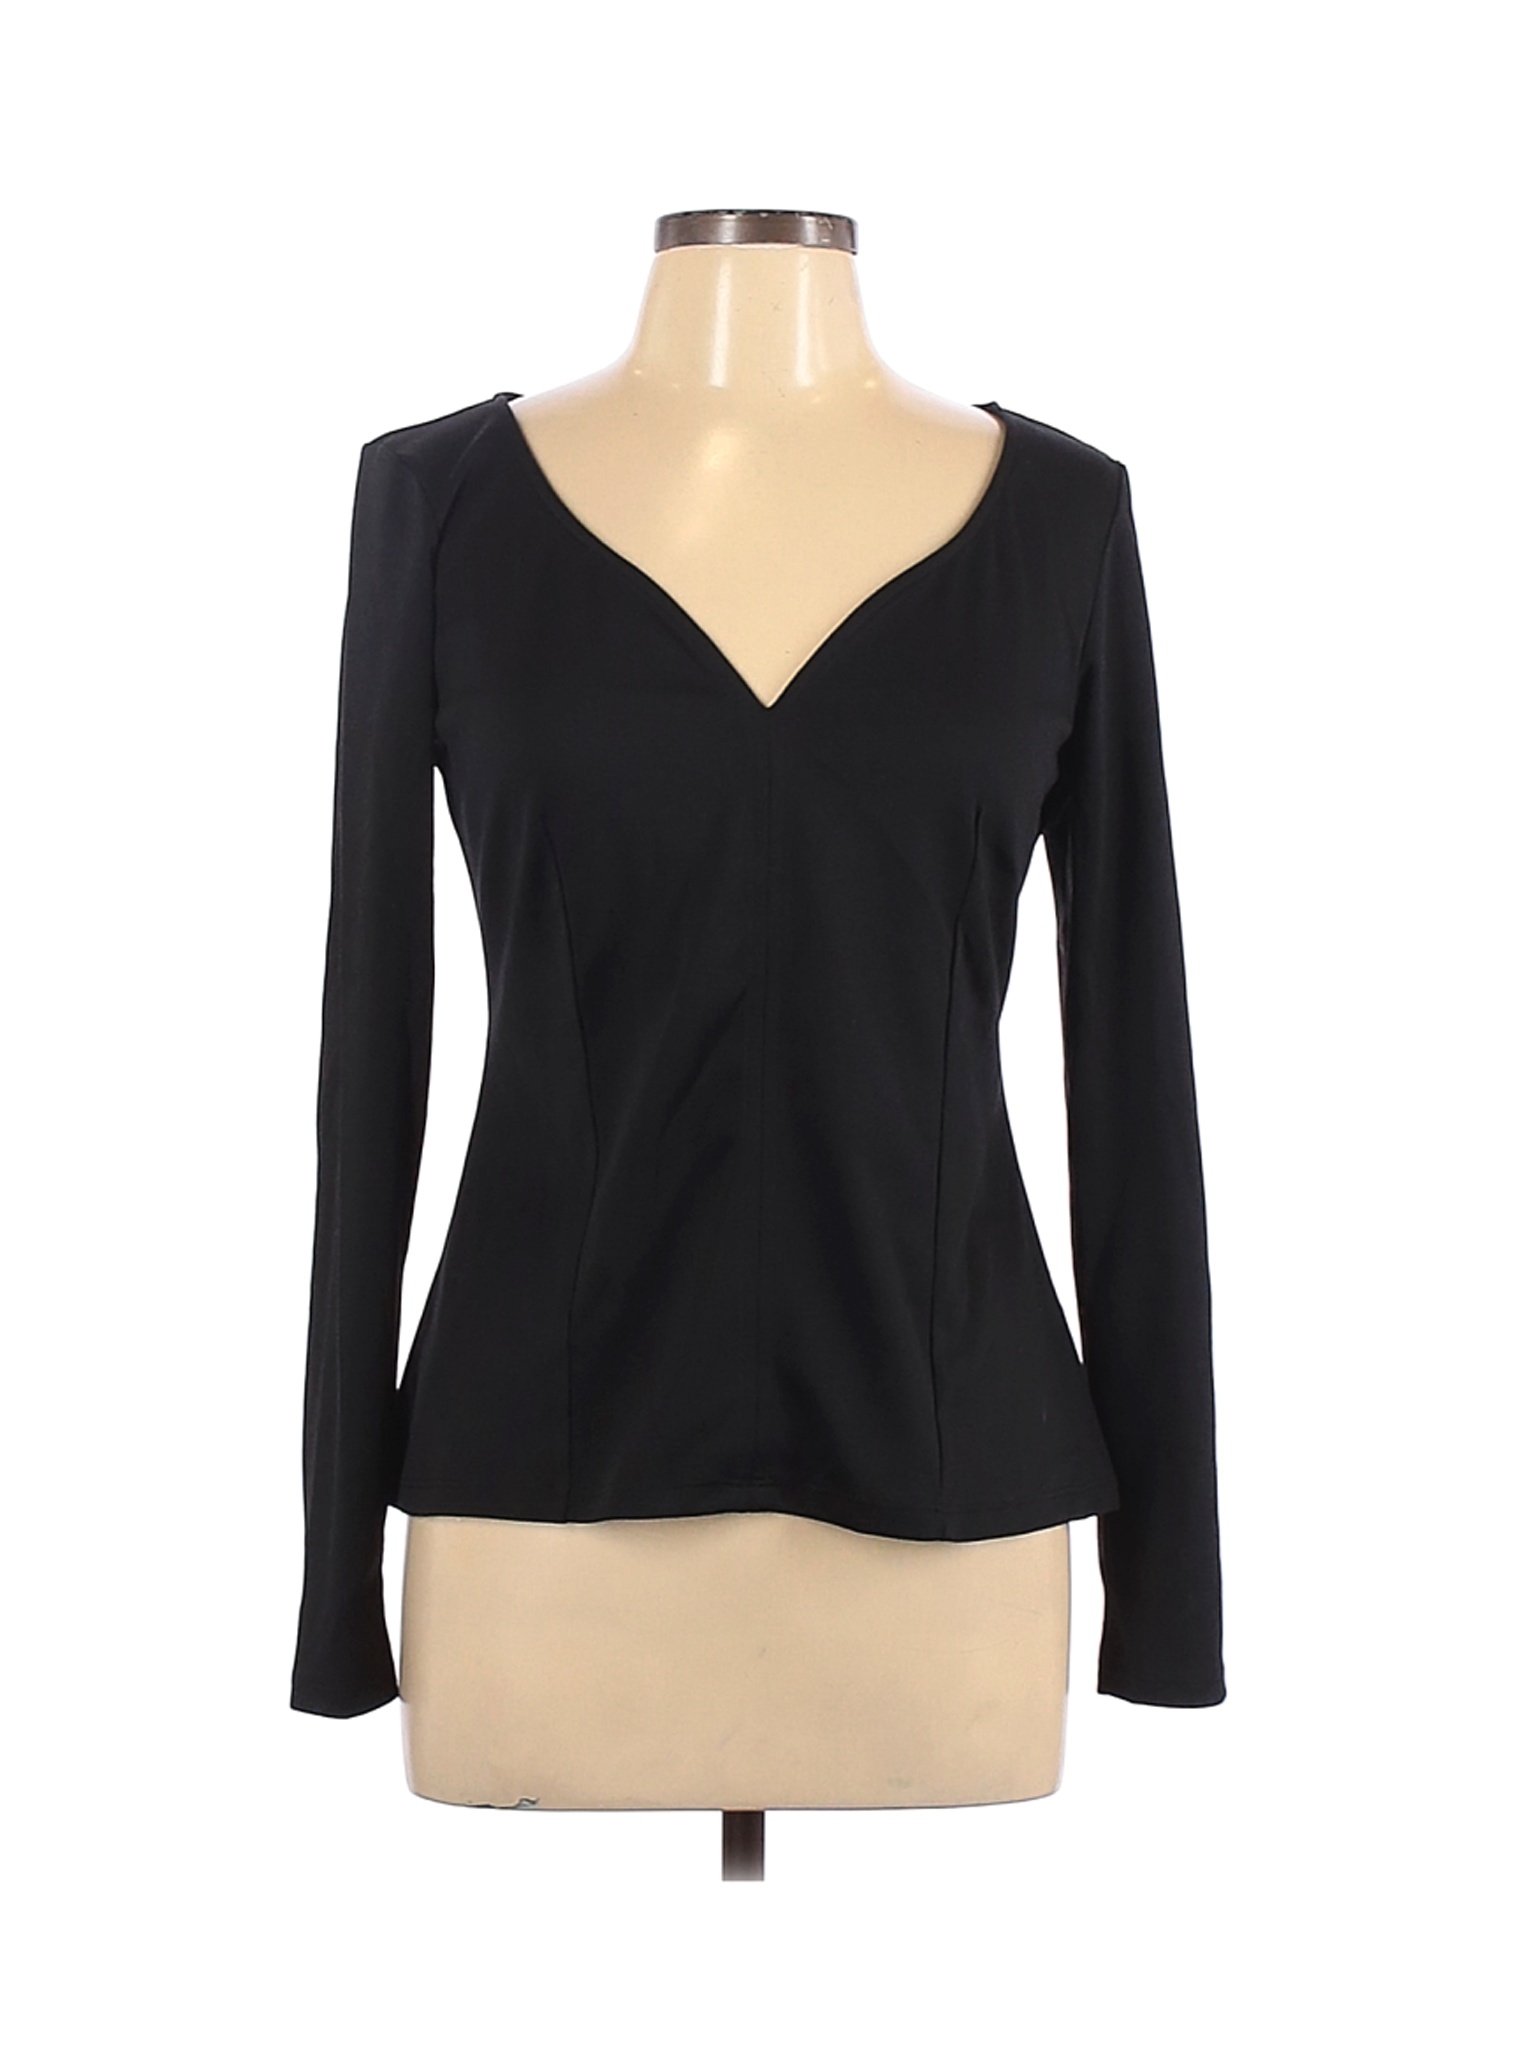 NWT H&M Women Black Long Sleeve Top L | eBay